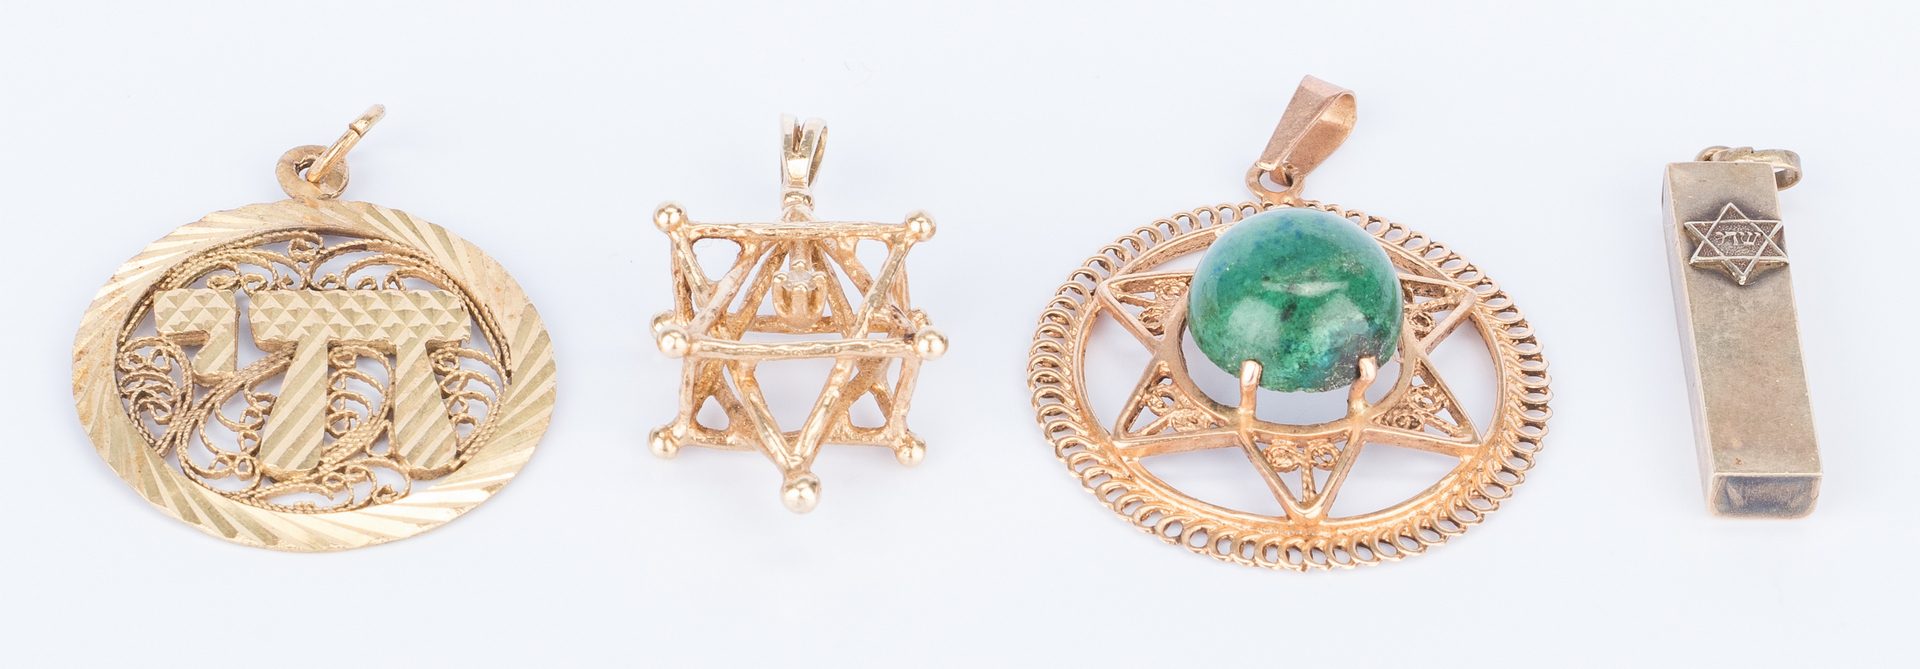 Lot 35: Group of 5 Lady's Jewelry, inc. Judaica